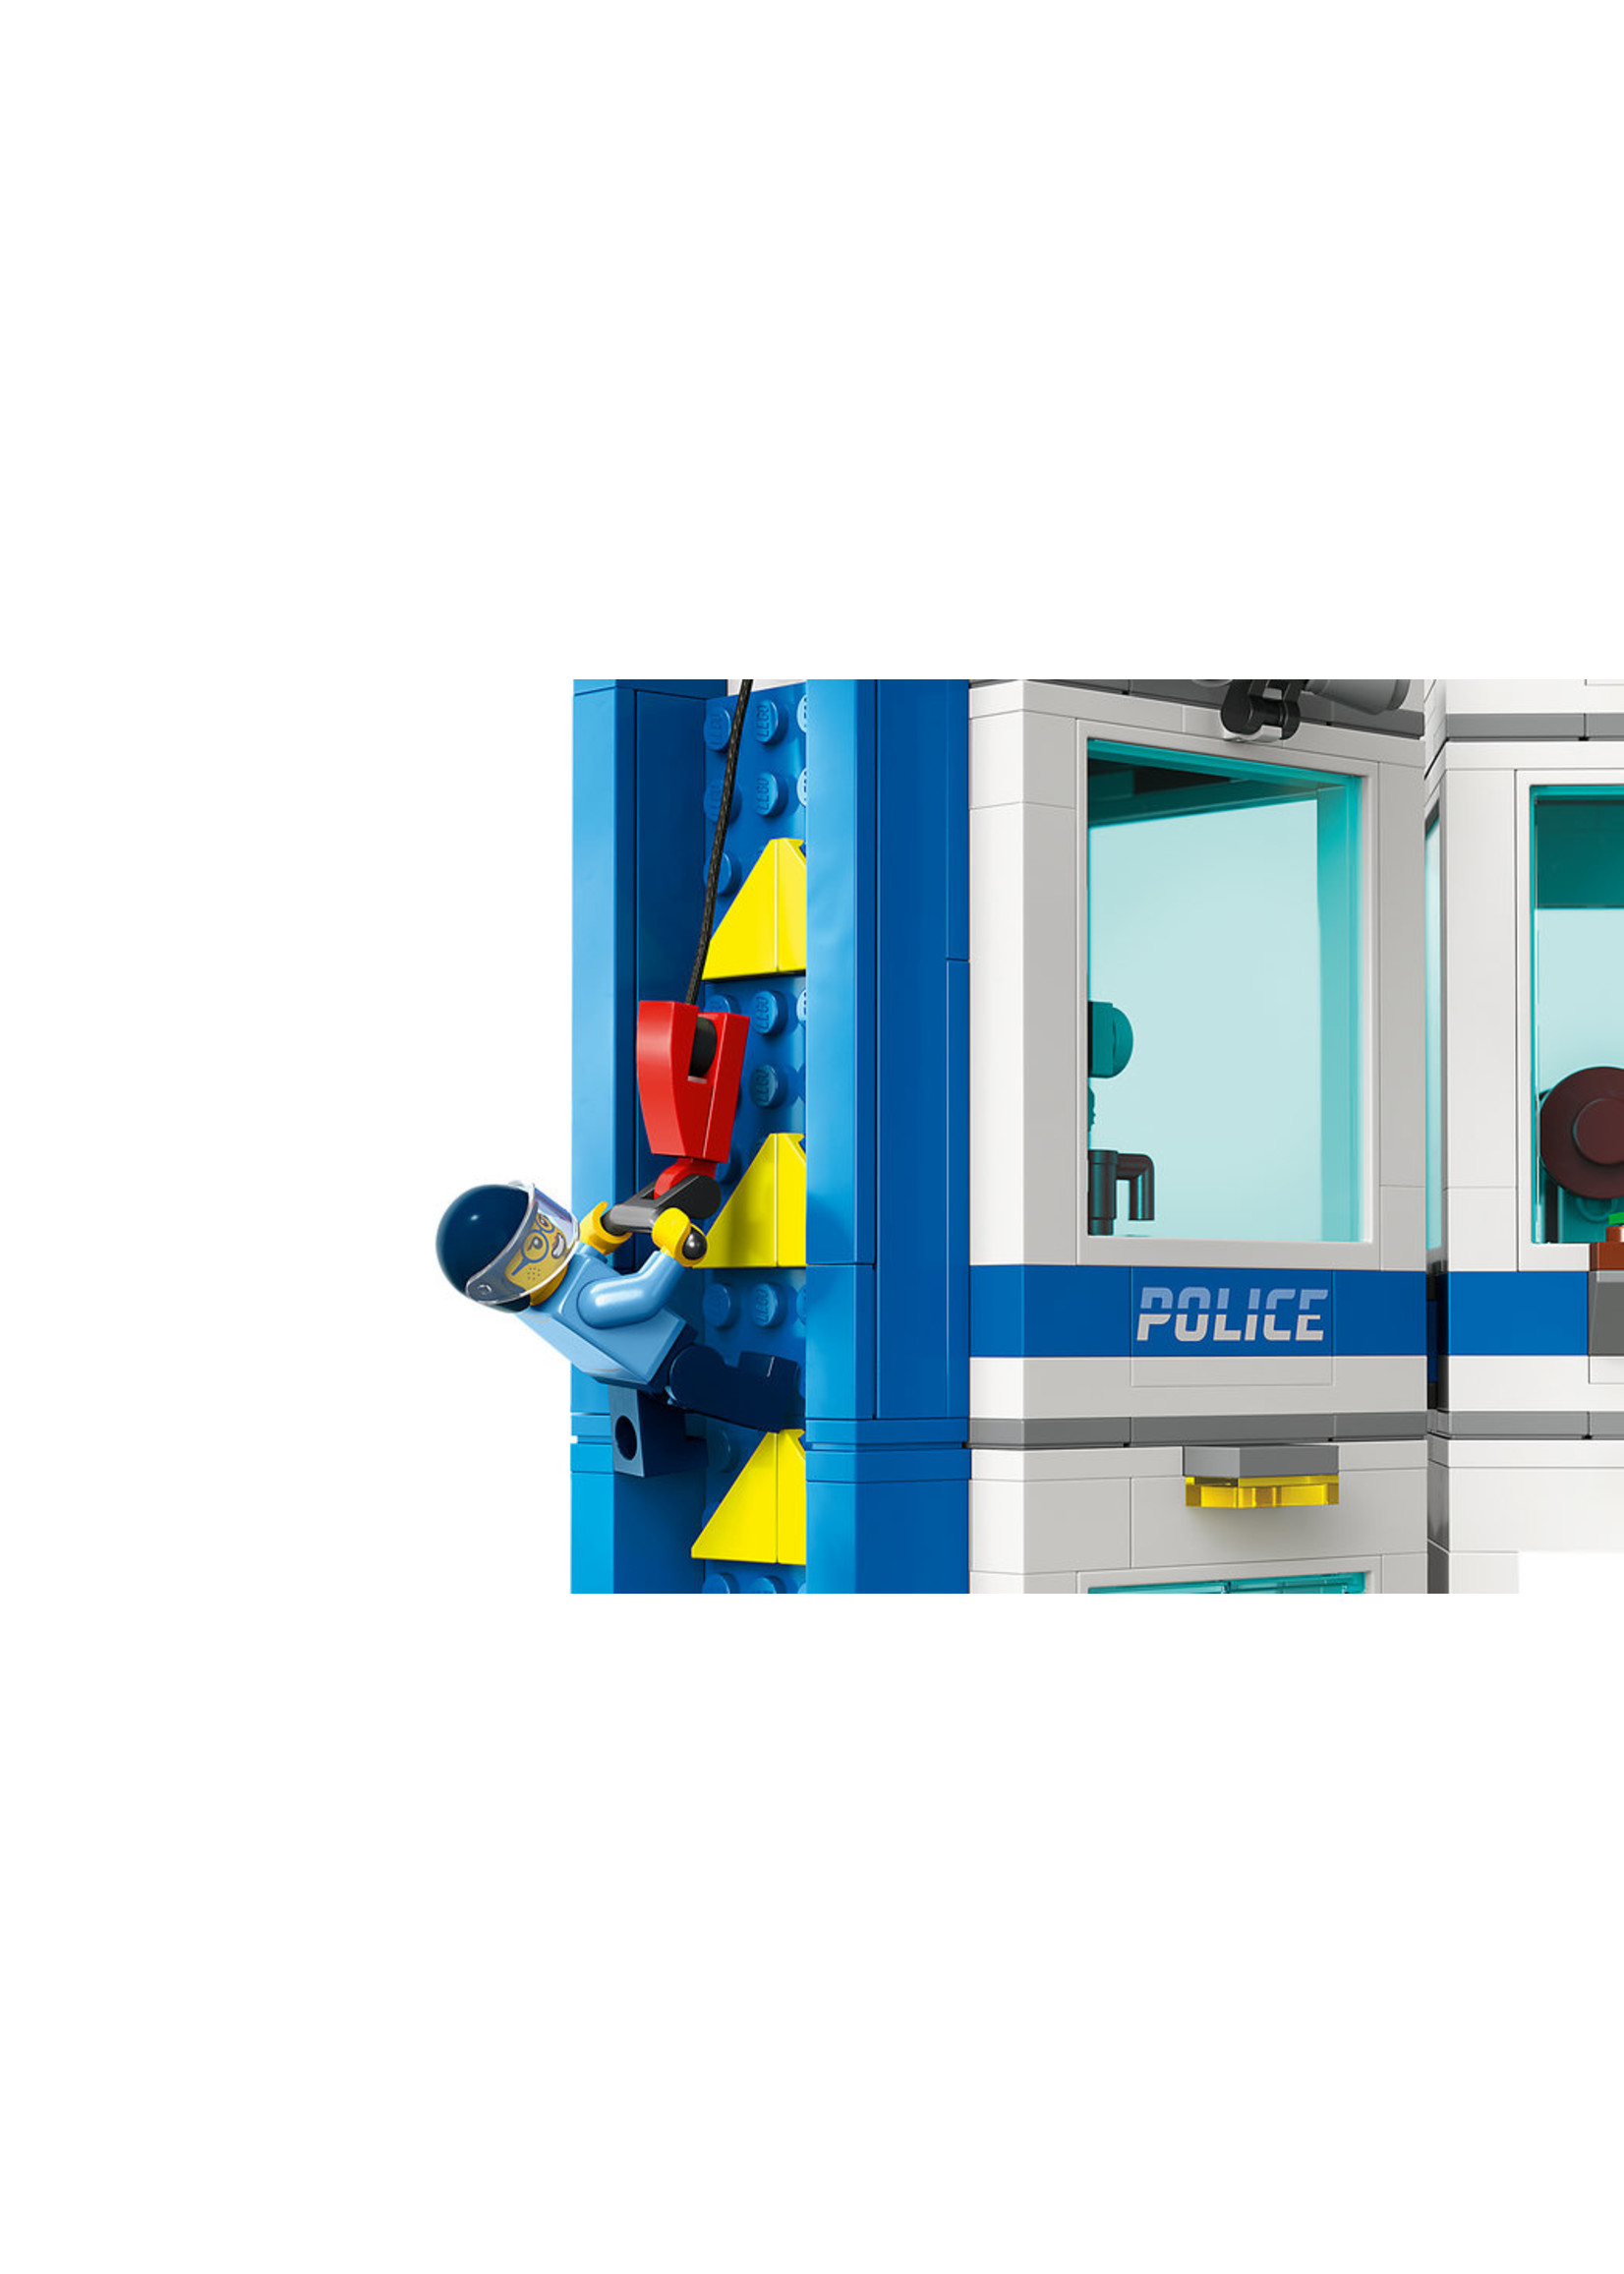 Lego 60372 - Police Training Academy - Hub Hobby